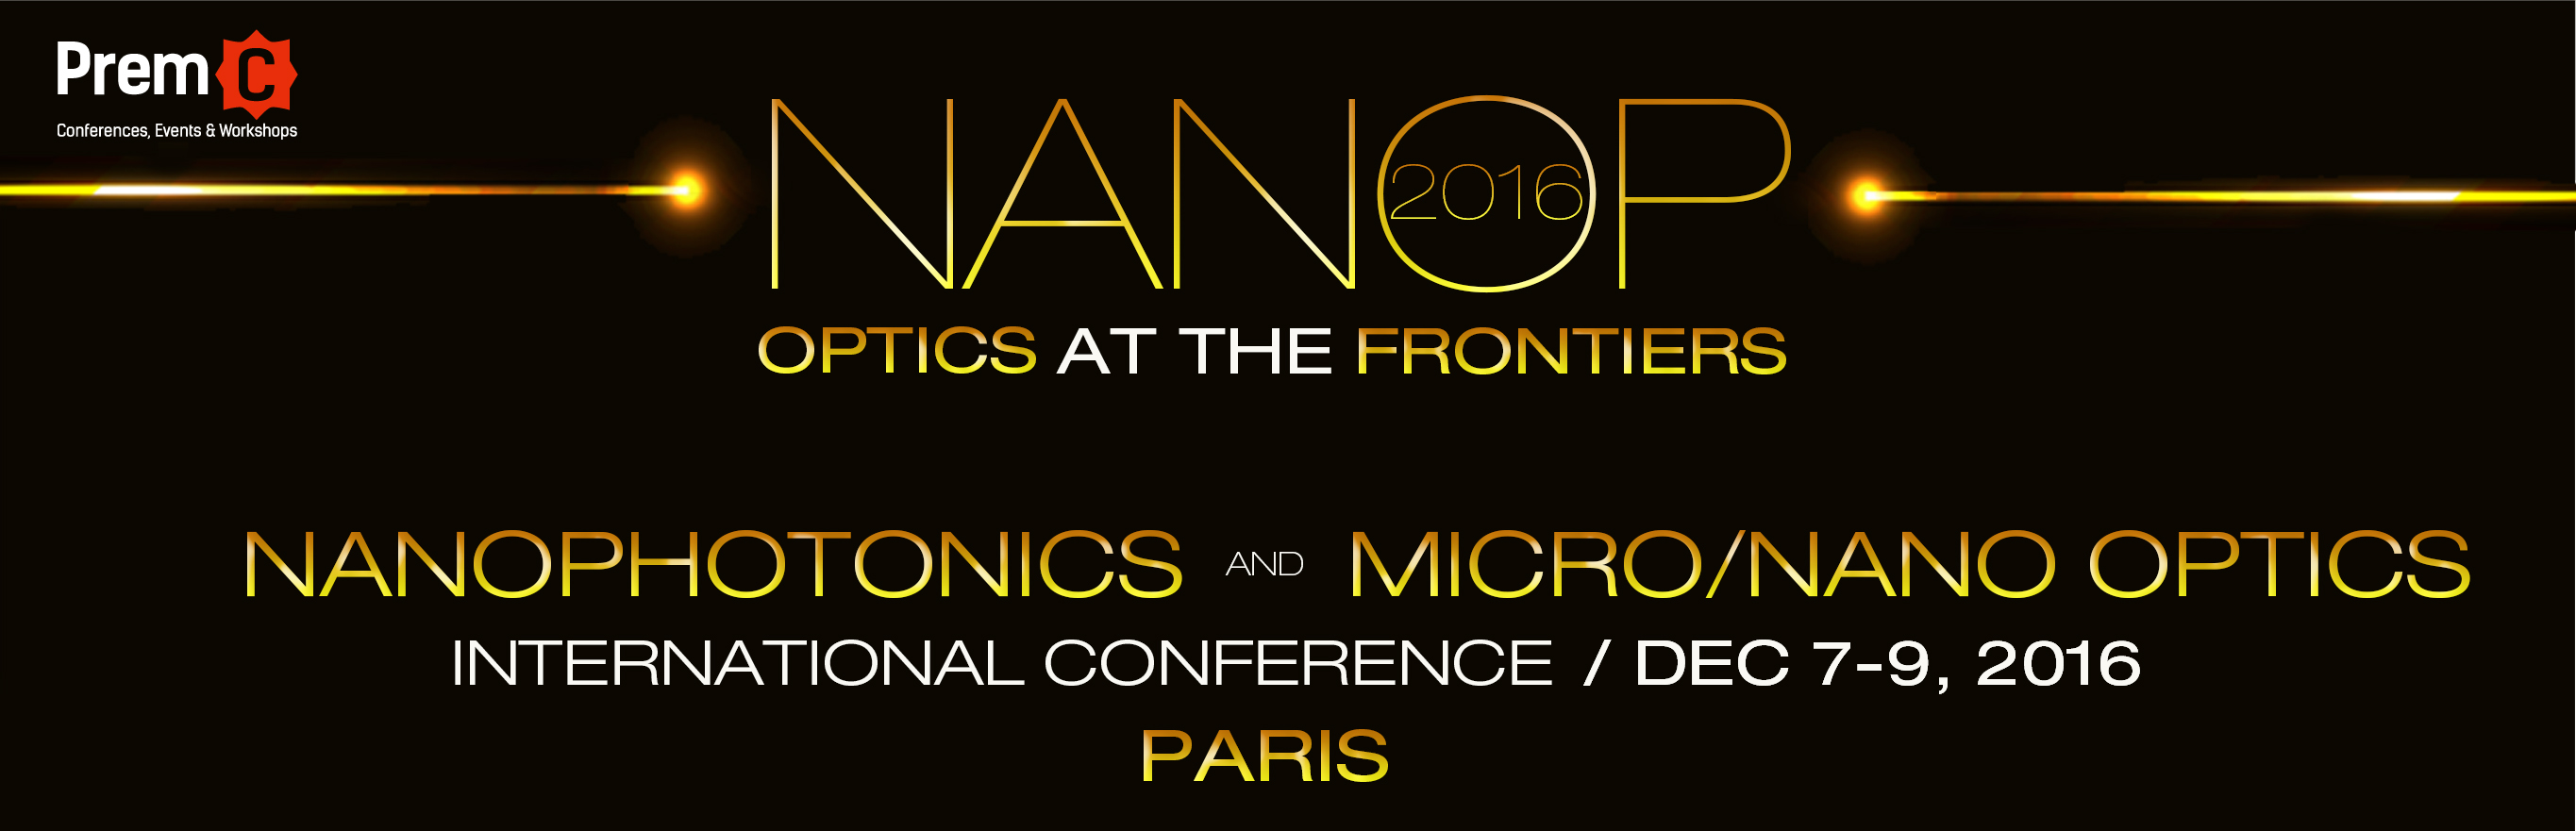 Nanophotonics and Micro/Nano Optics International Conference - NANOP 2016